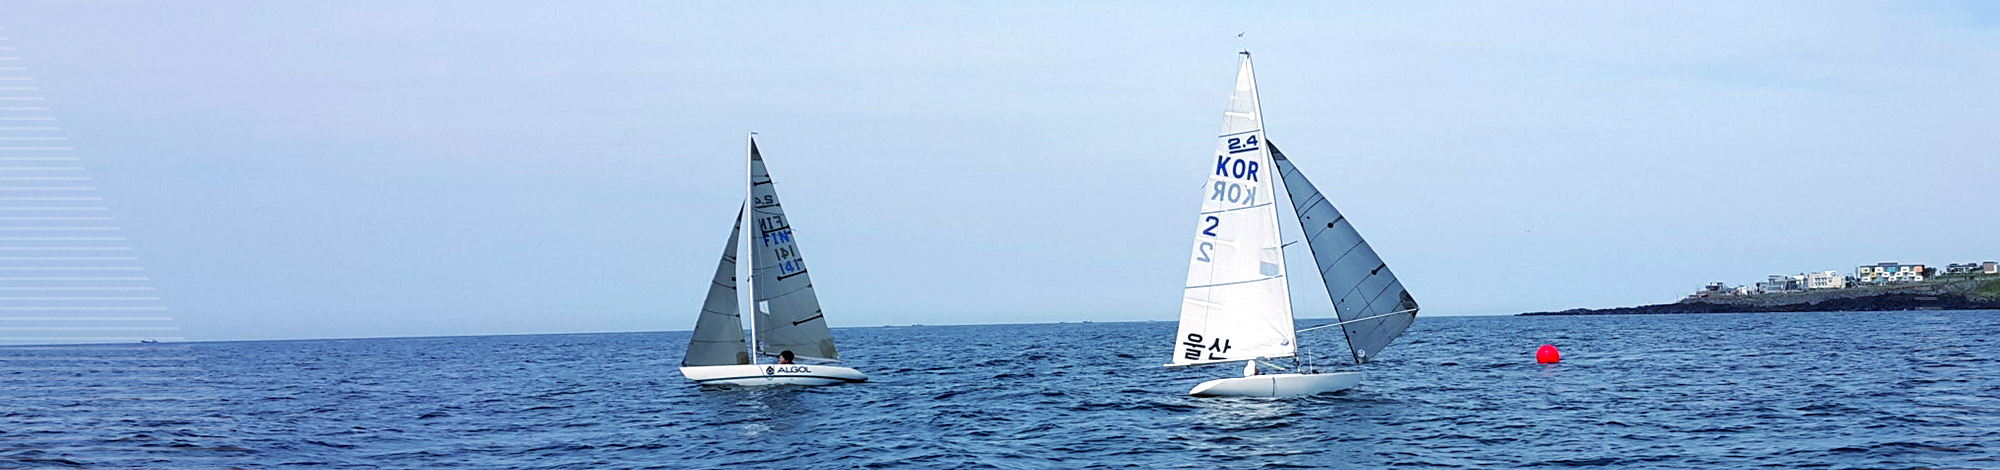 Korea Disabled Yacht Federation